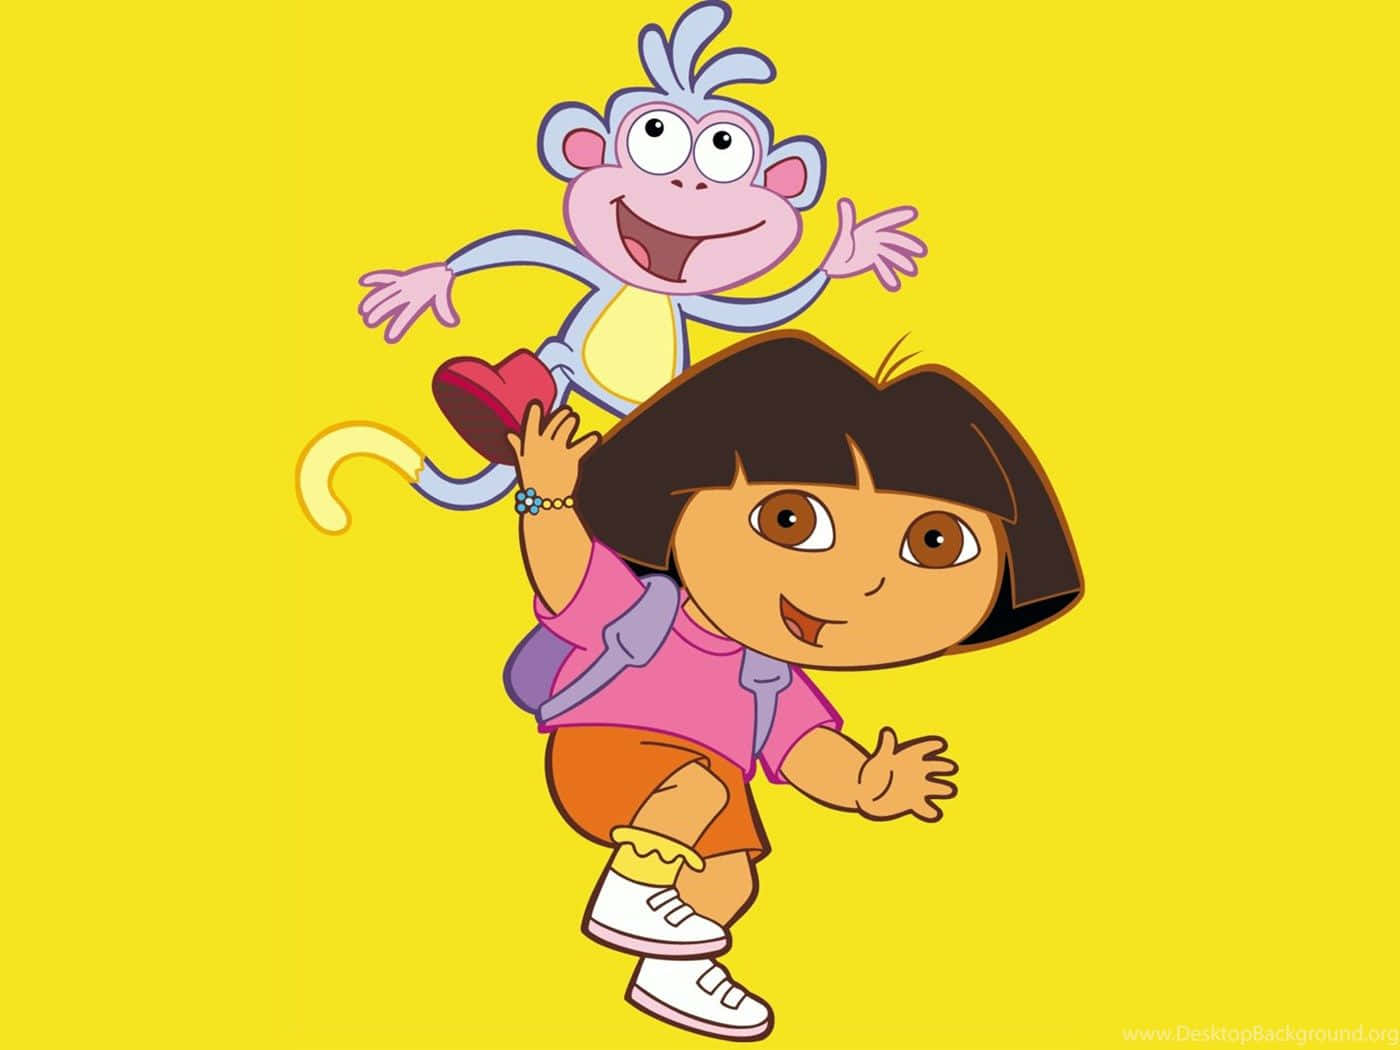 "Come Along on A Fun Adventure with Dora"